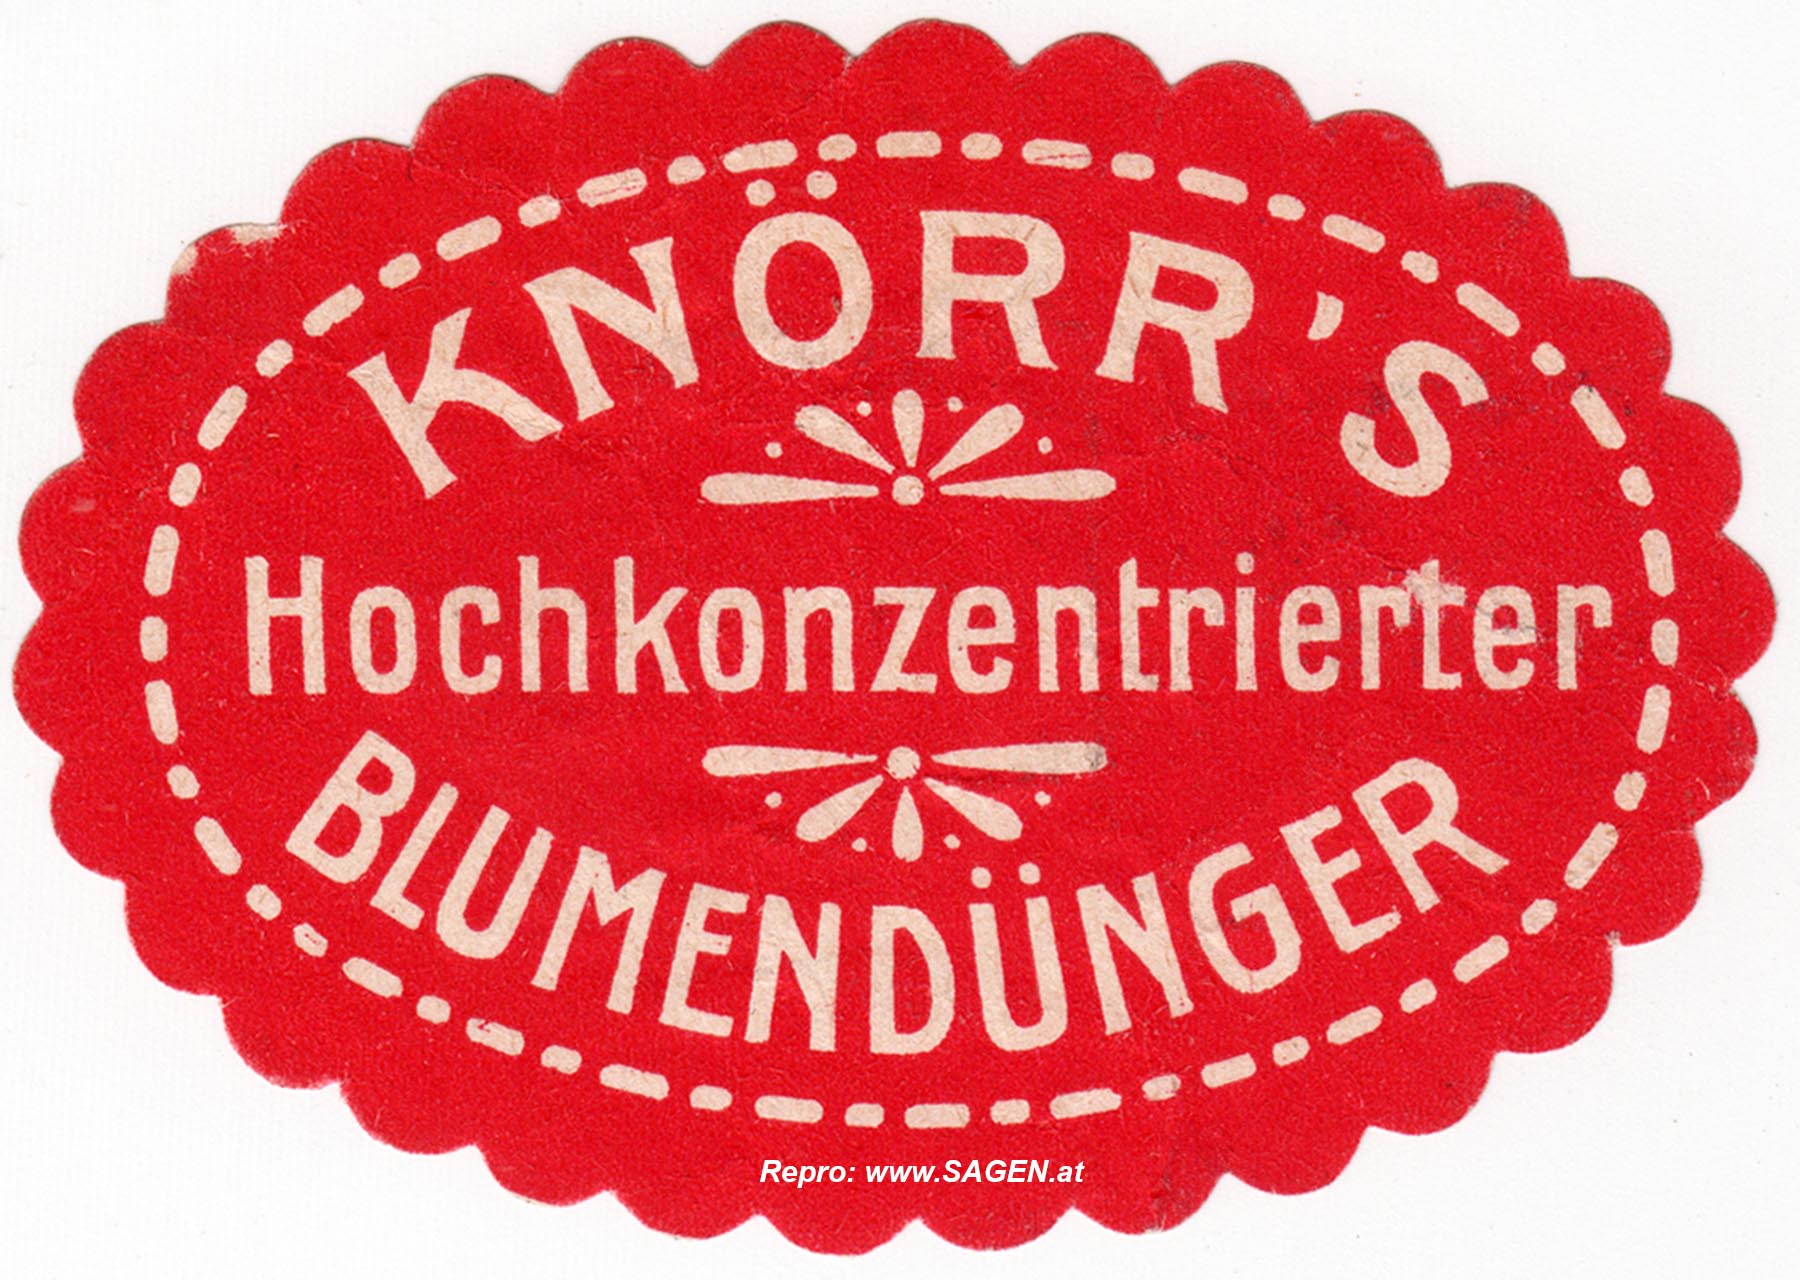 Reklamemarke Knörr's Blumendünger